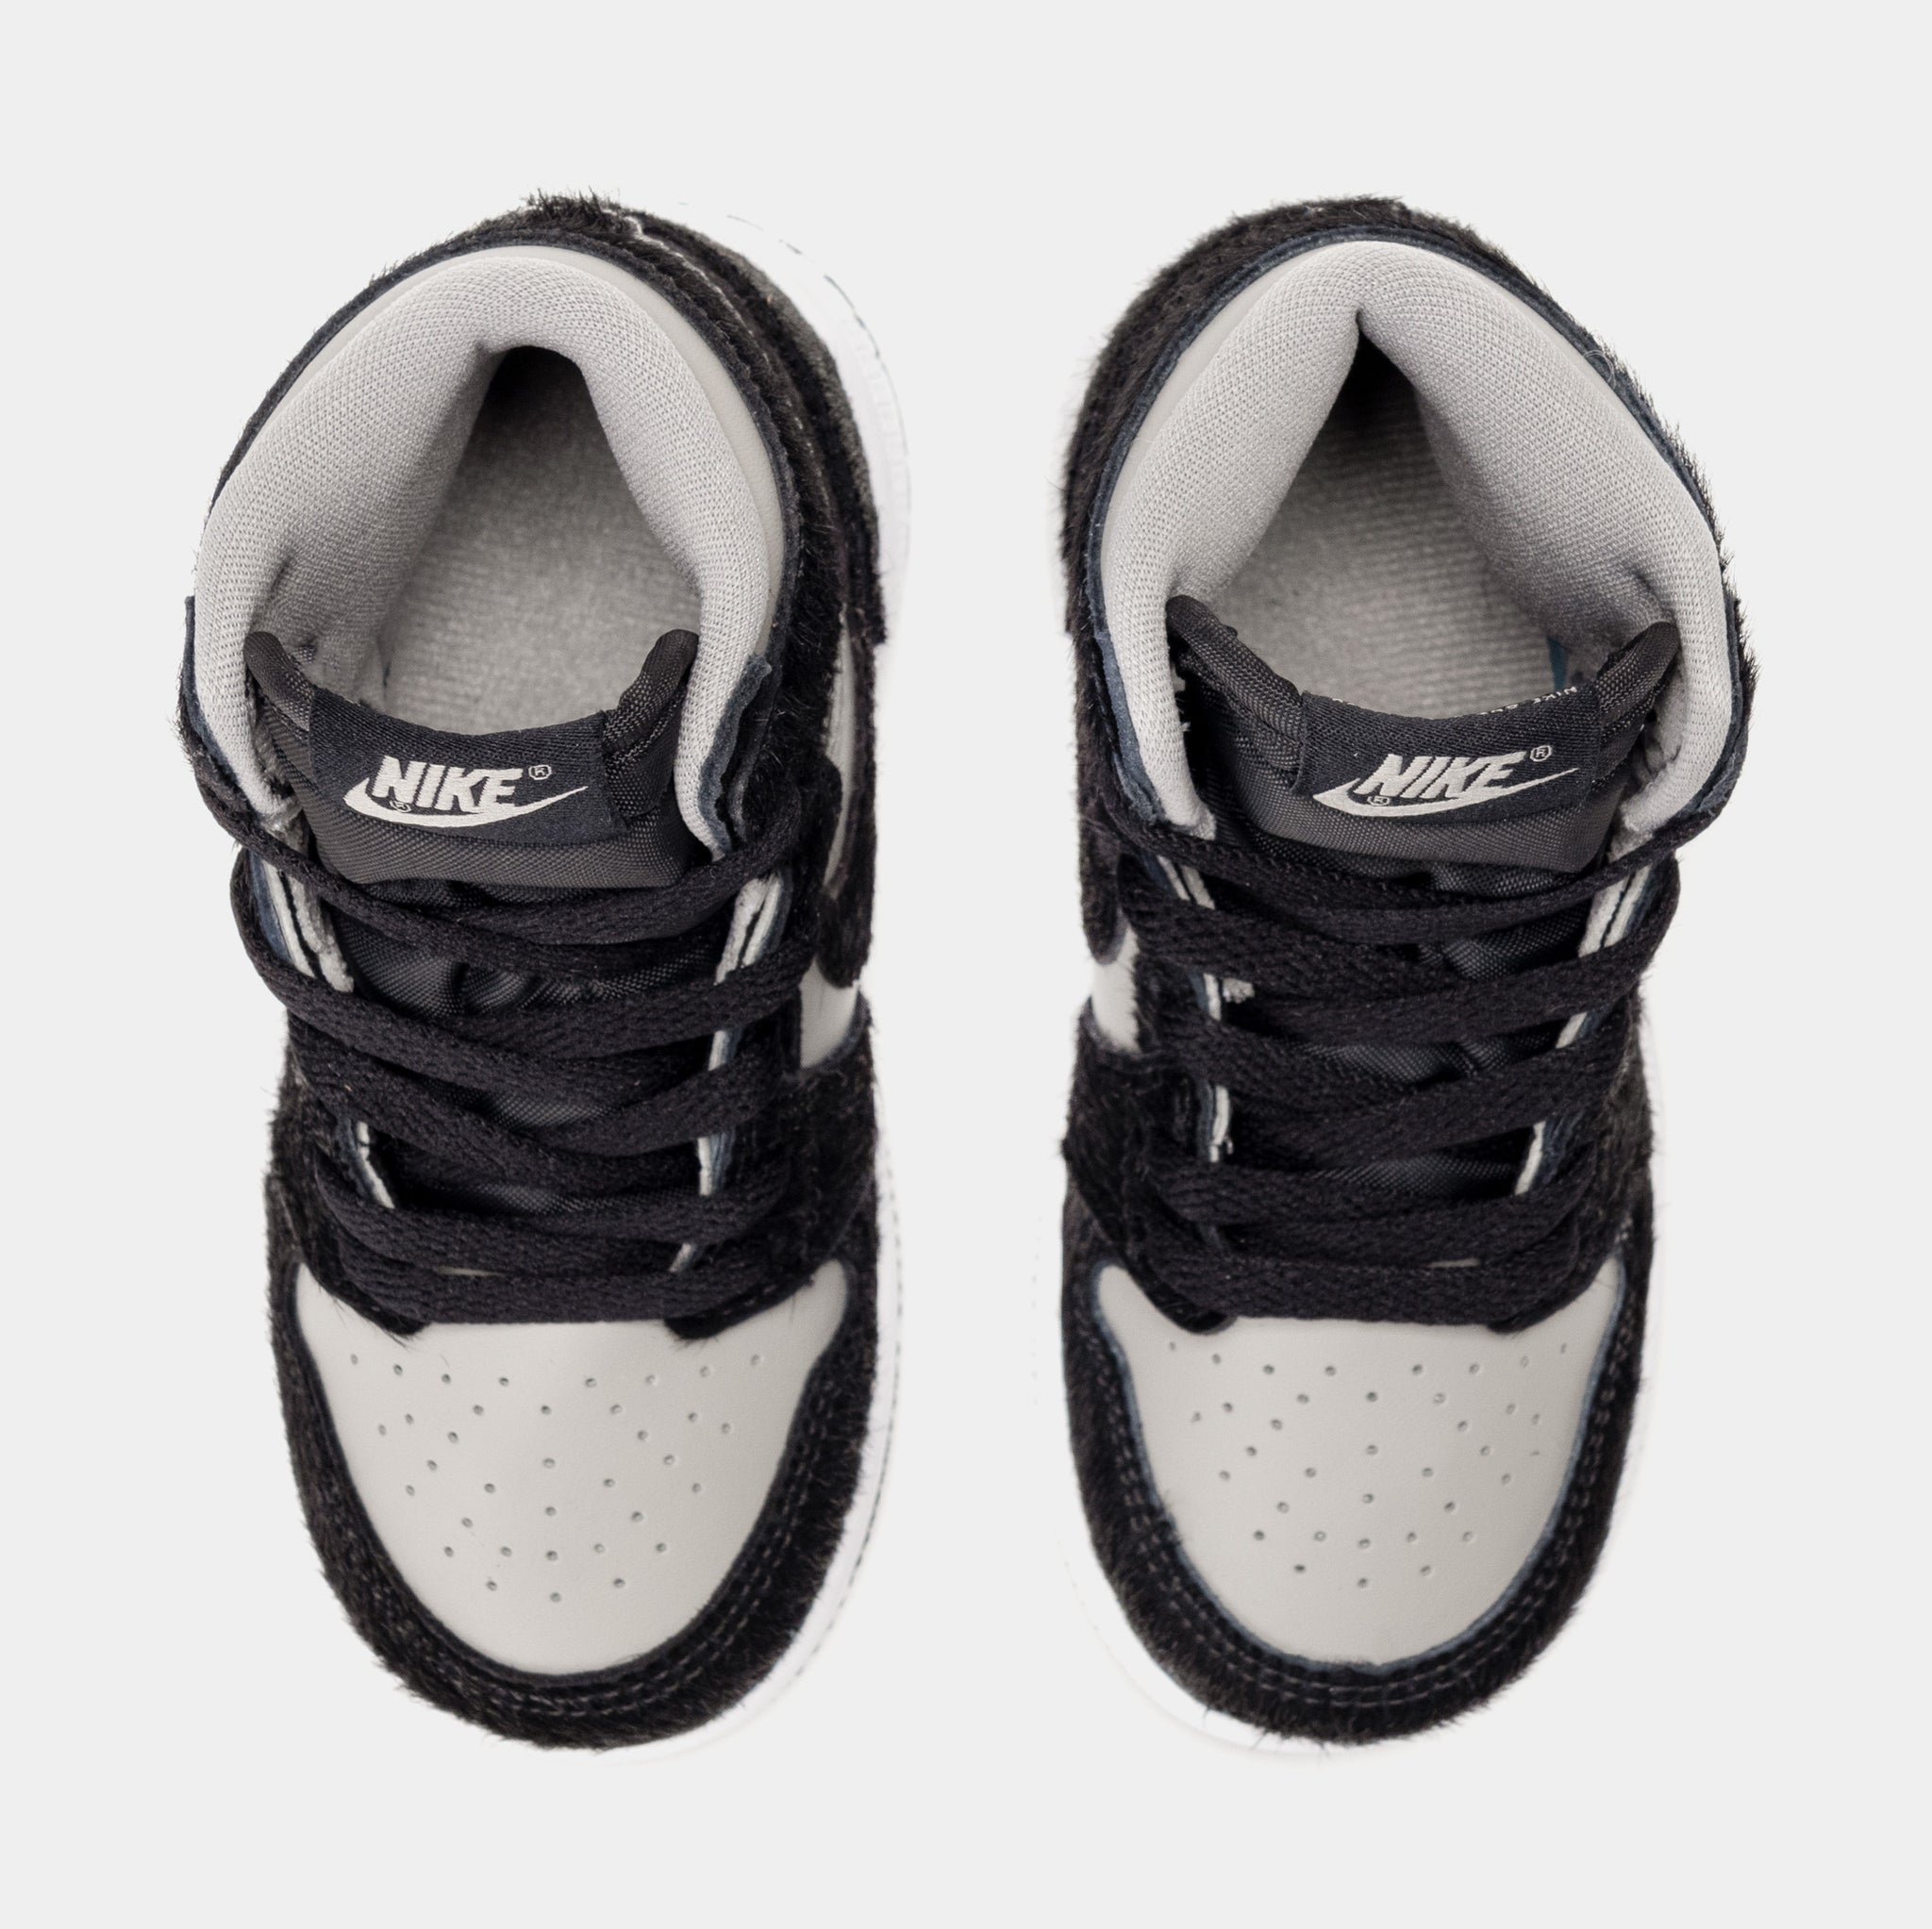 Nike Air Jordan 13 Black/hyper Pink TD Sz 11C Unisex Baby Child 439669-001